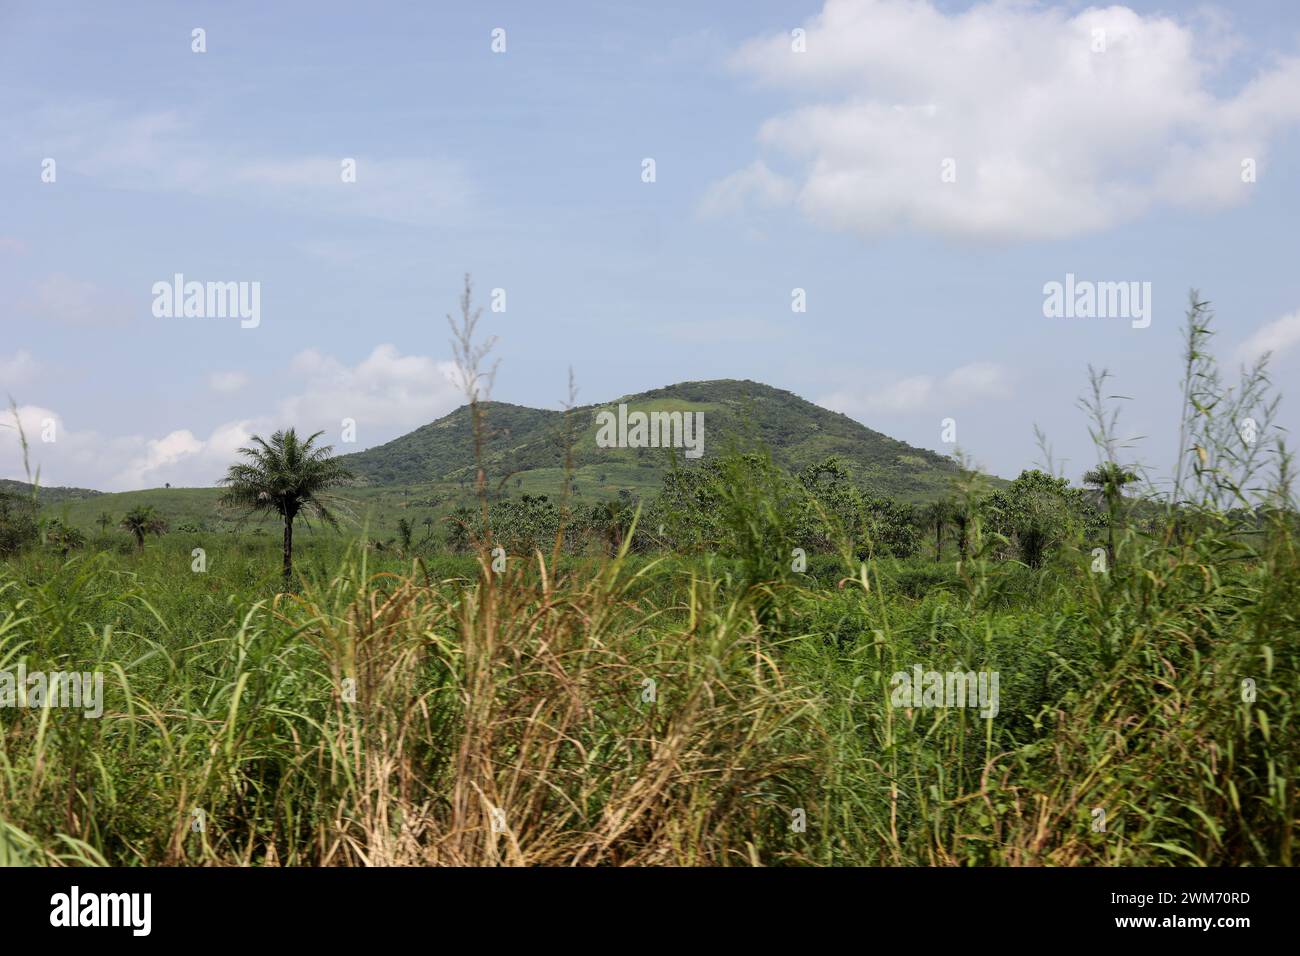 General views of Sierra Leone in Africa. Stock Photo